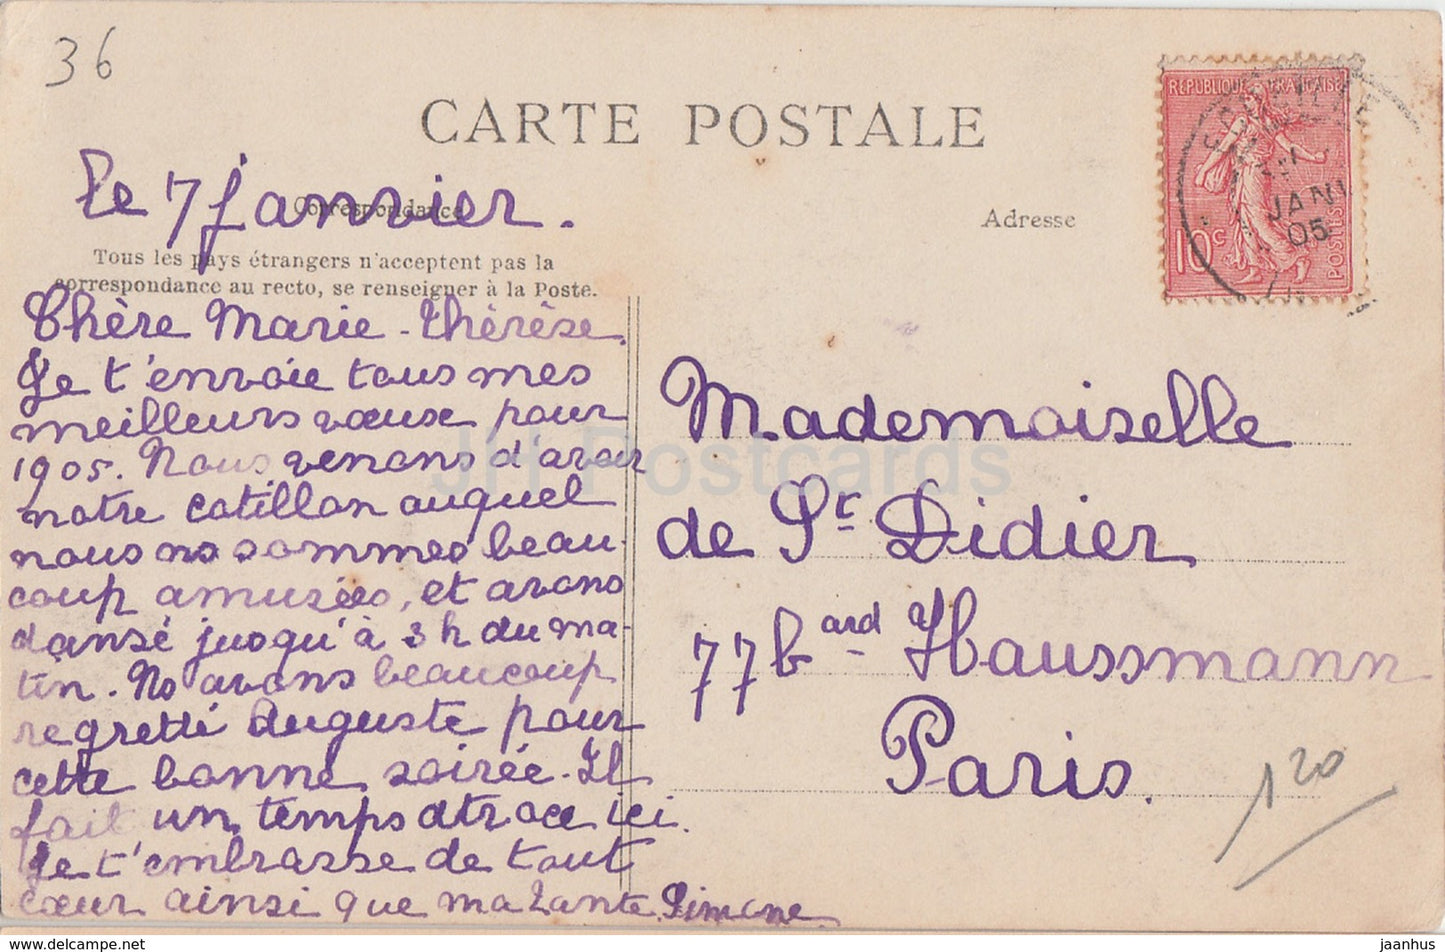 Chateau de Valencay - Facade Principale - castle - old postcard - 1905 - France - used